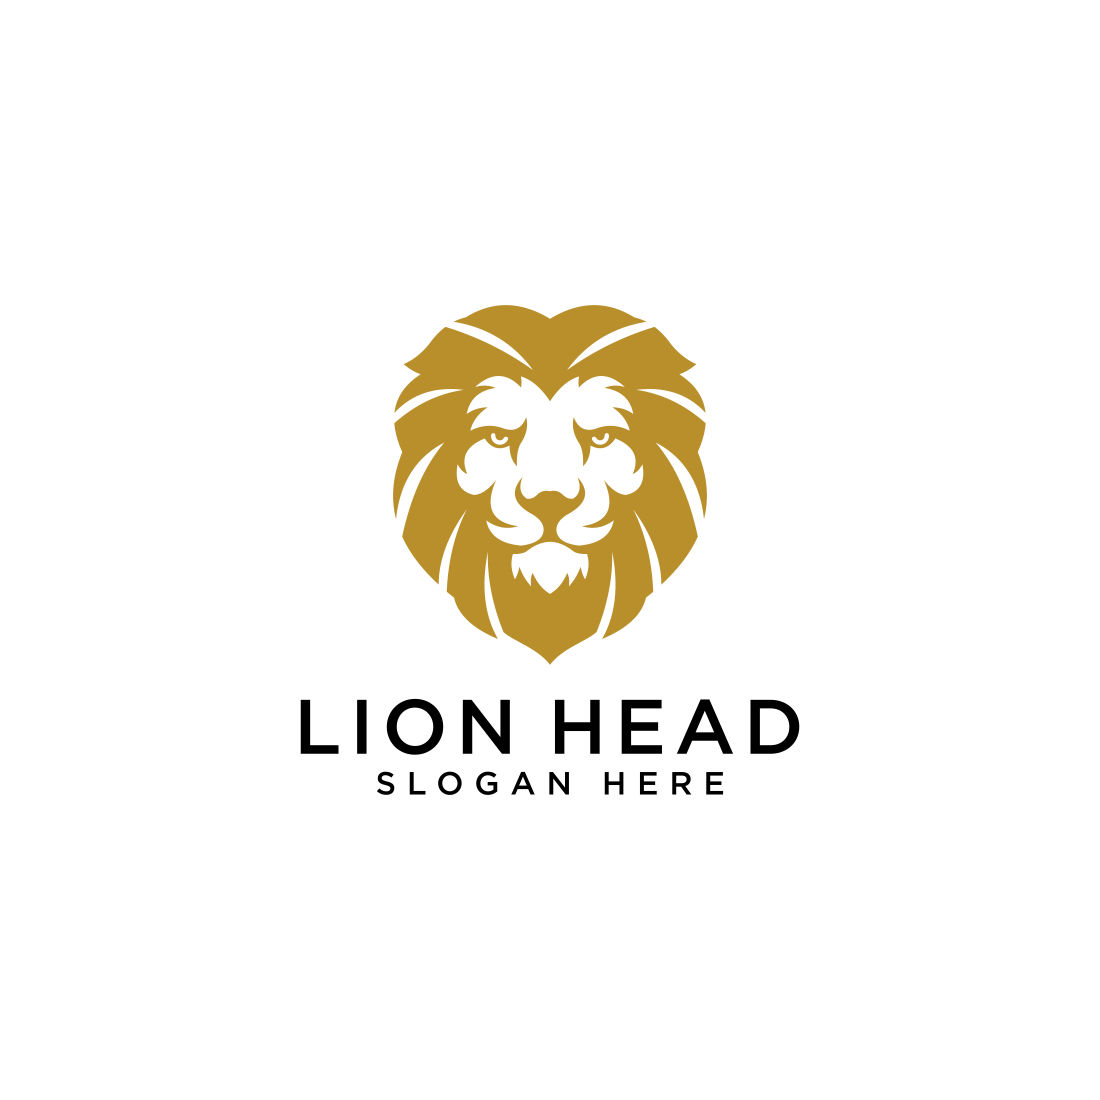 lion head logo vector animal preview image.